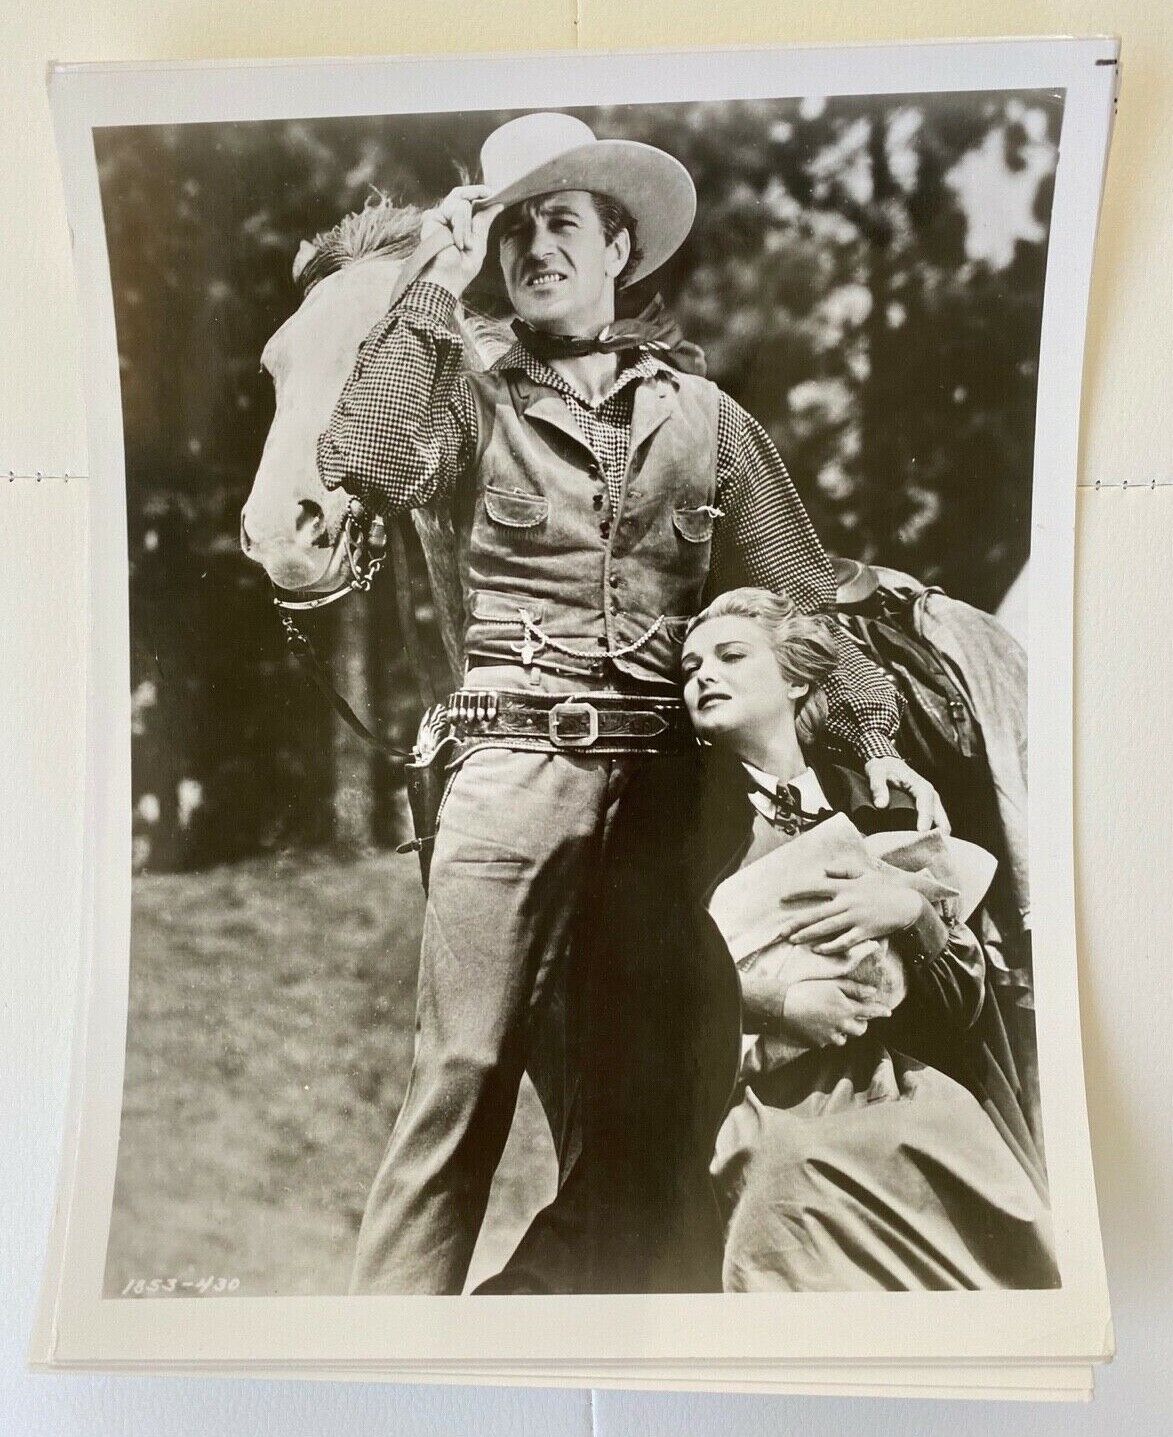 Gary Cooper Cowboy Vintage Original Hollywood Celebrity Publicity B & W Photo 